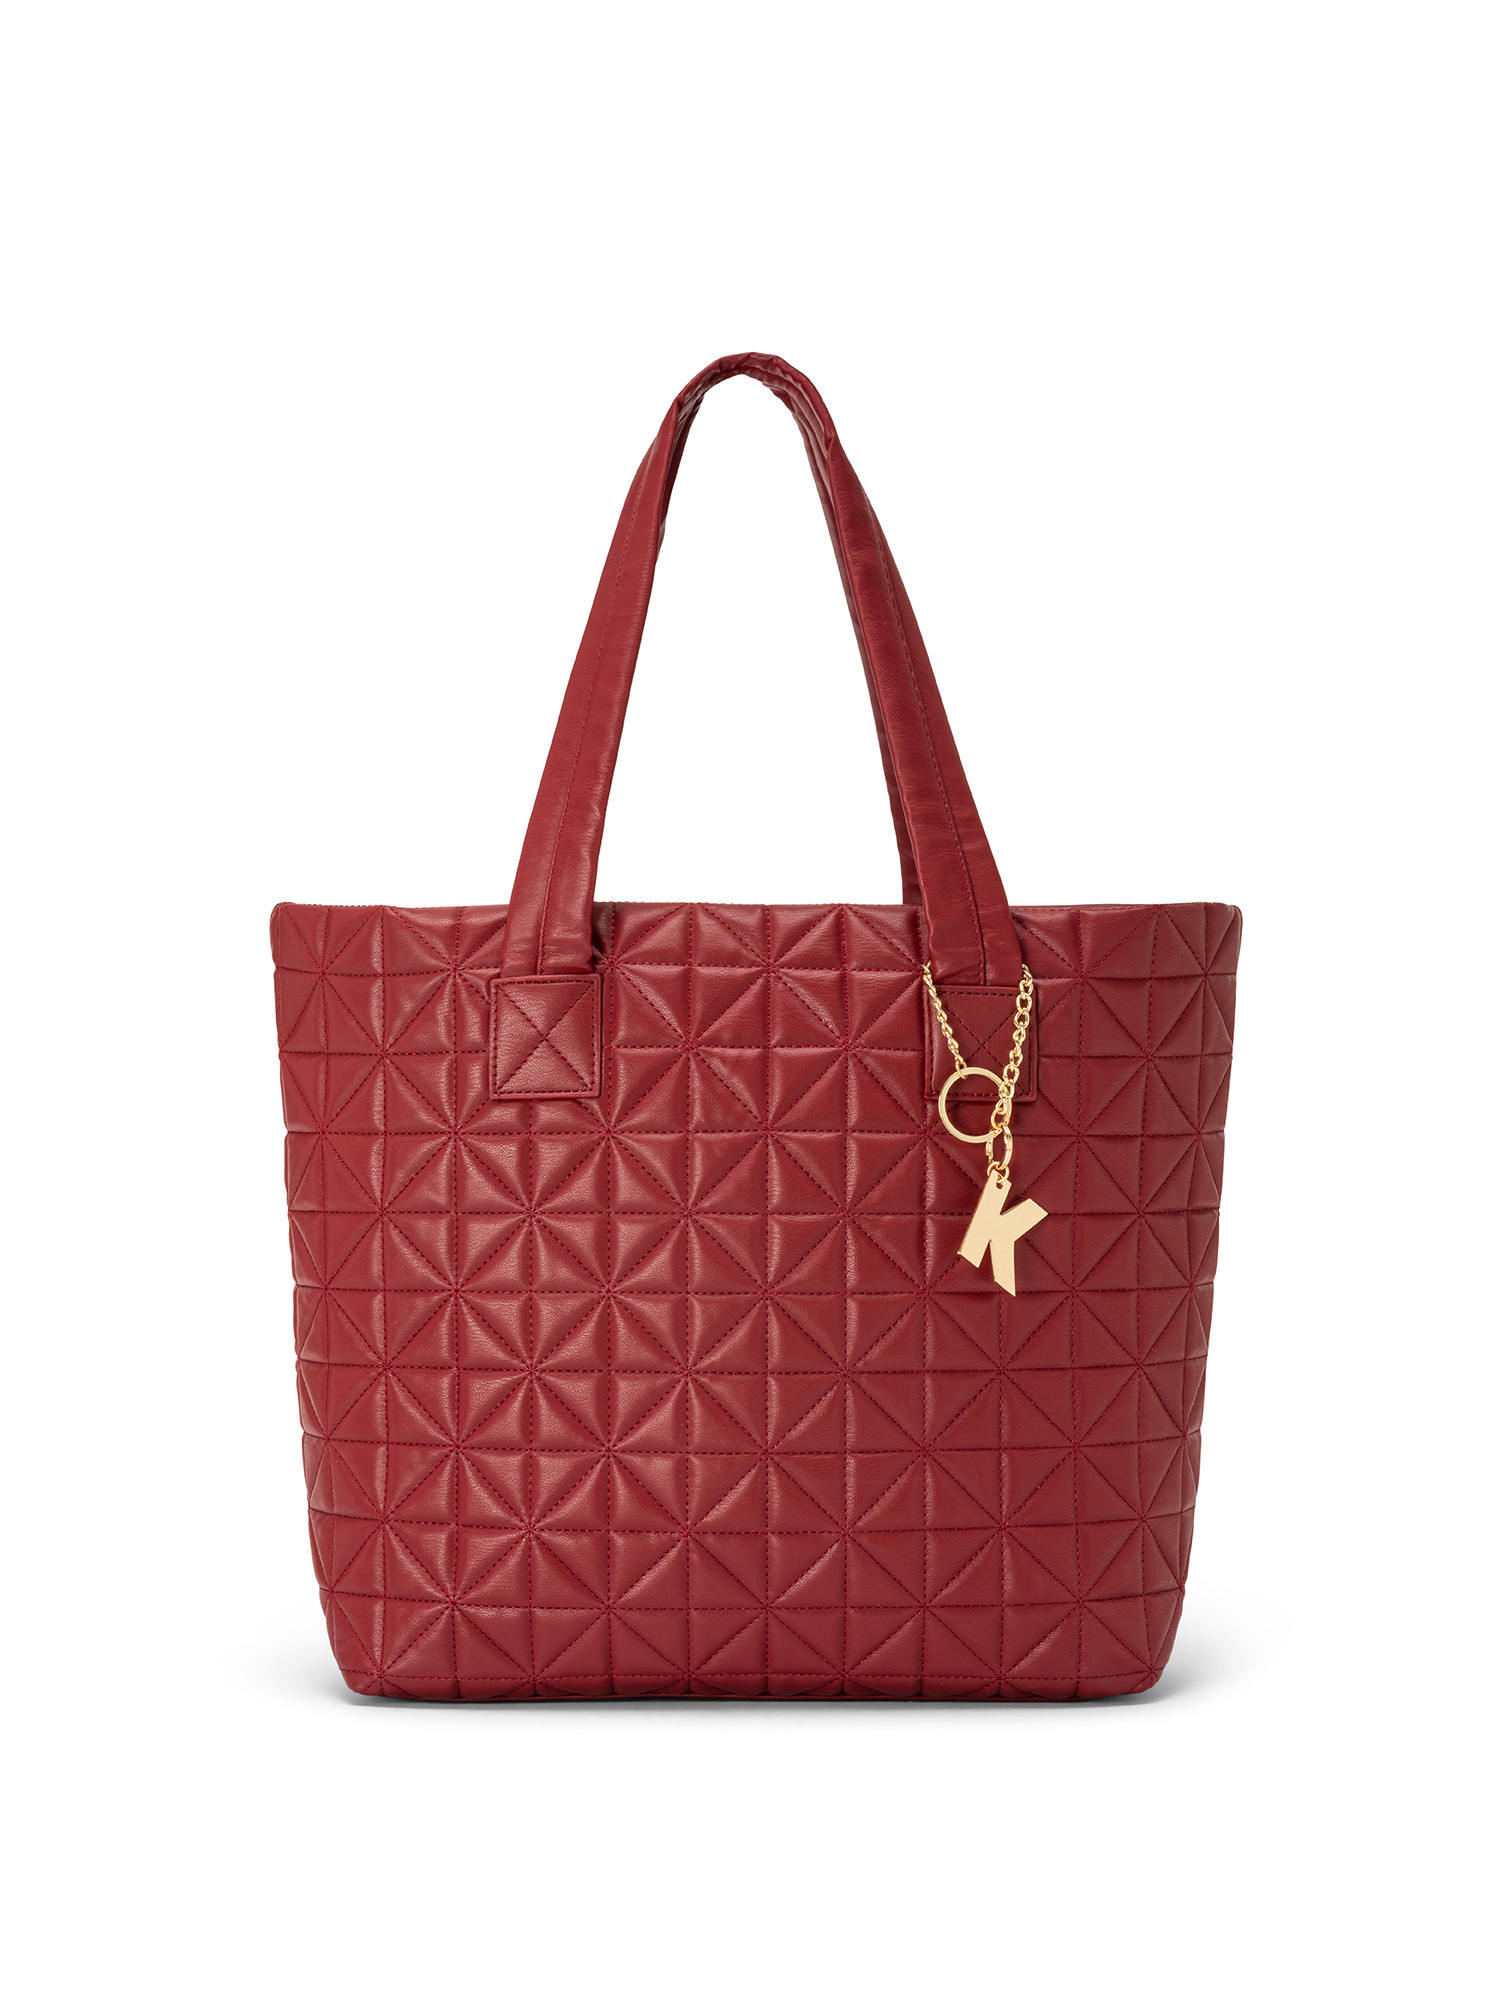 Koan - Shopping bag with motif, Red, large image number 0